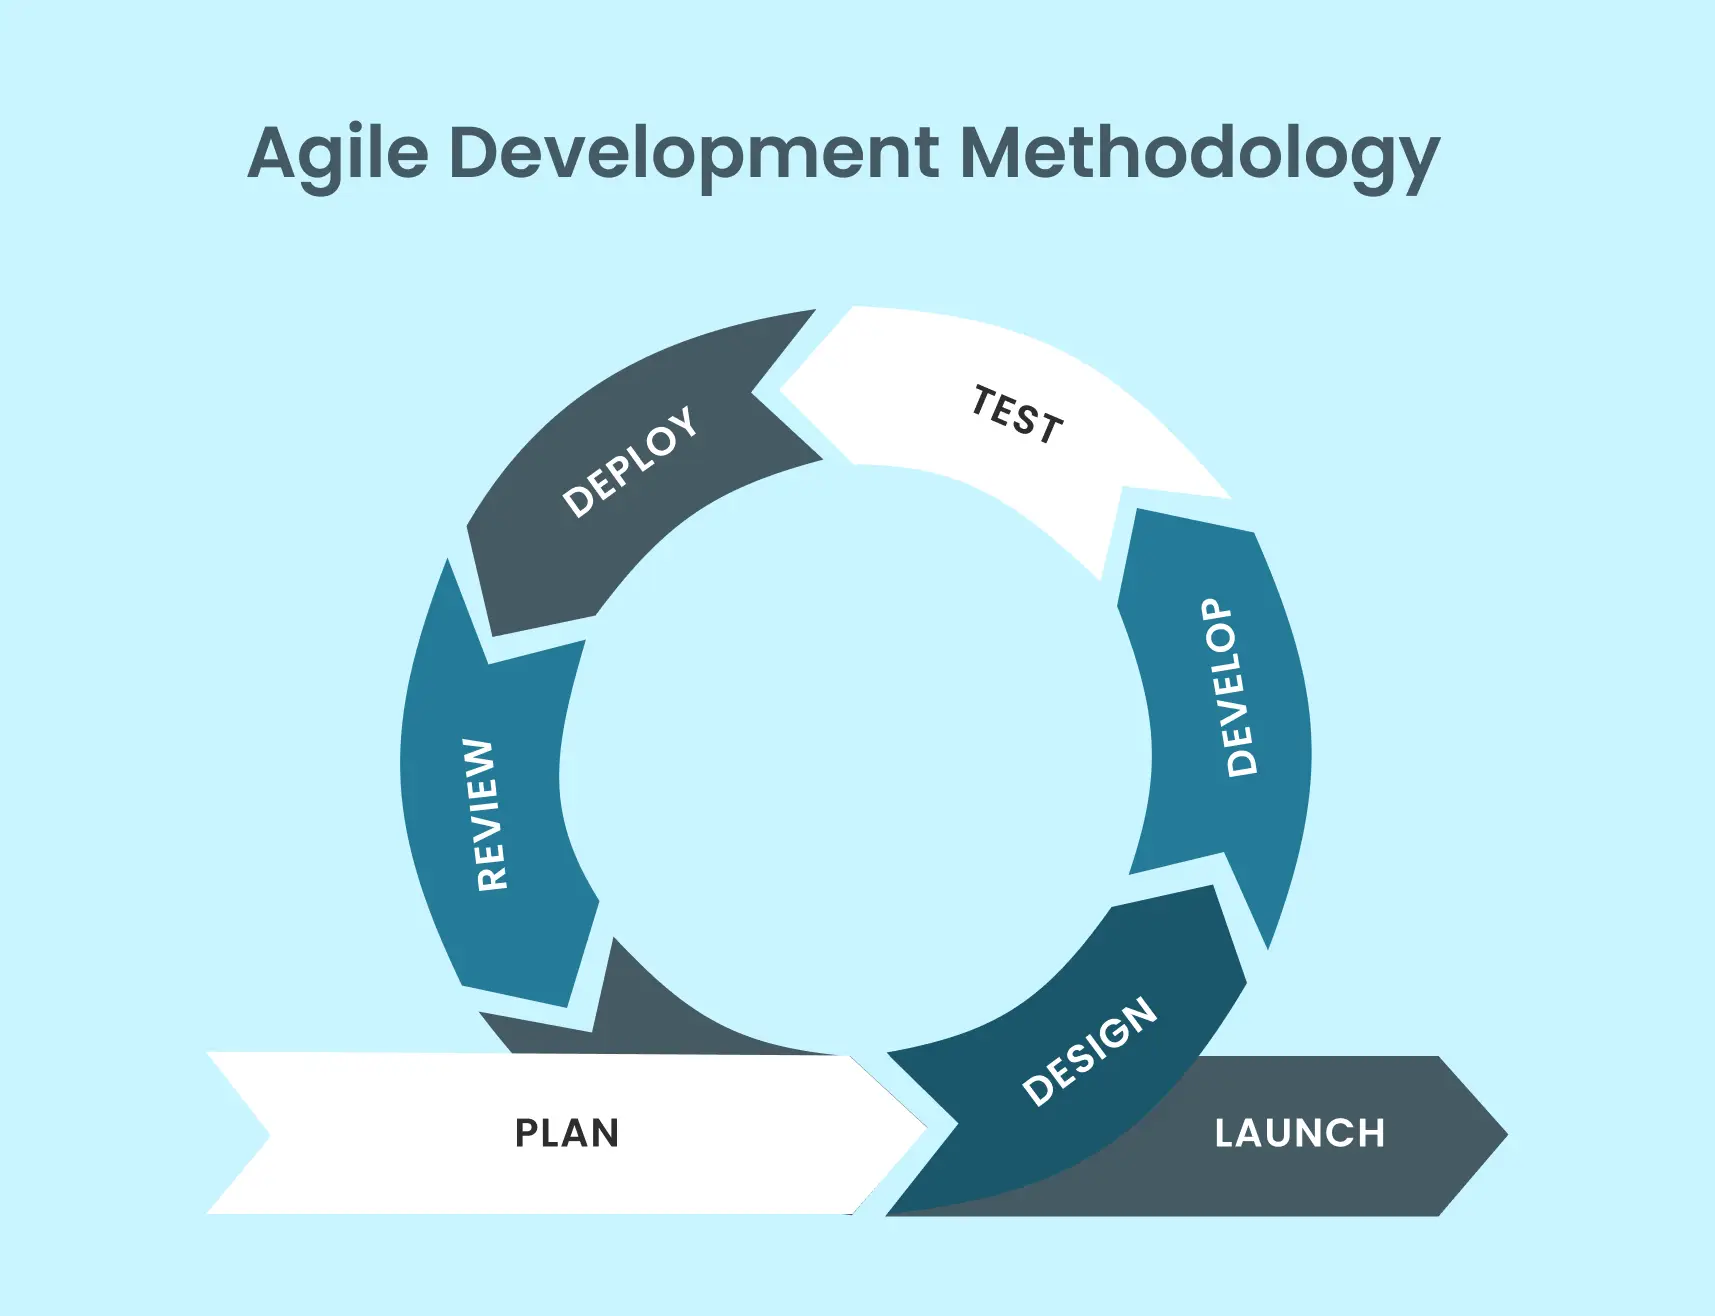 A Visual representation of Agile Development Methodology.